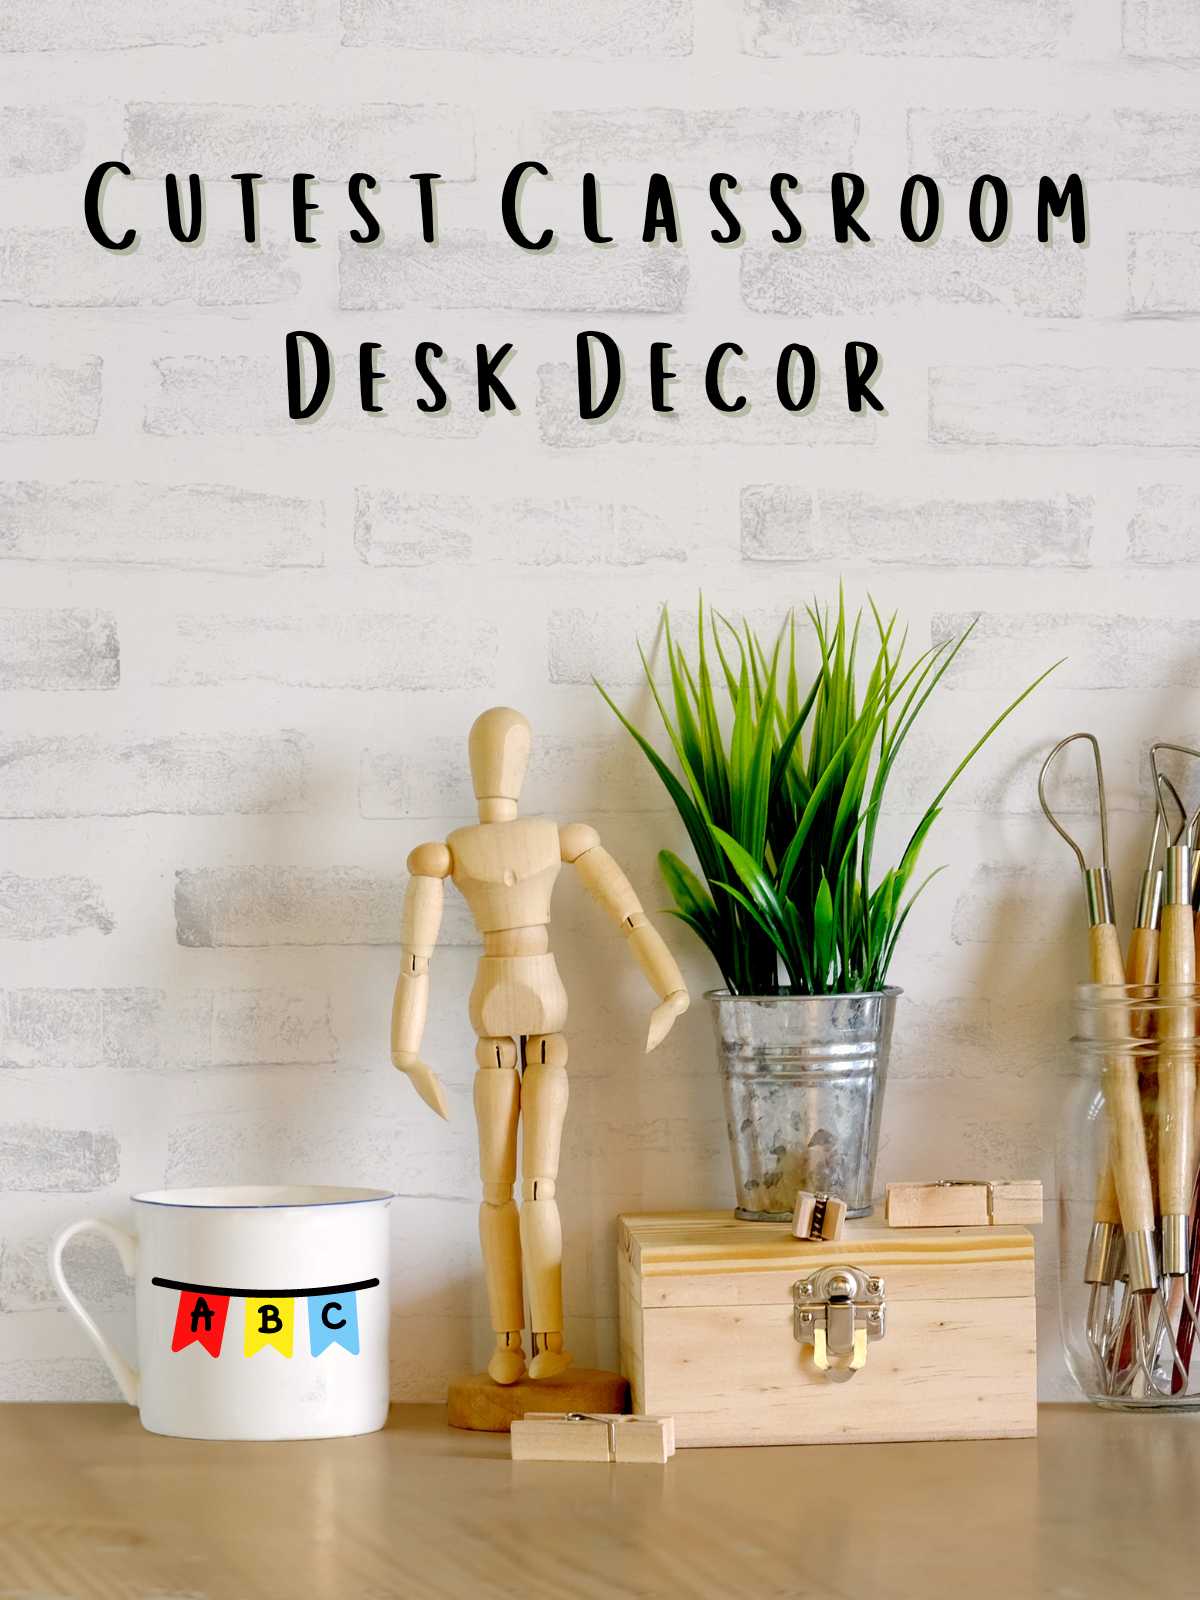 Classroom desk decor ideas